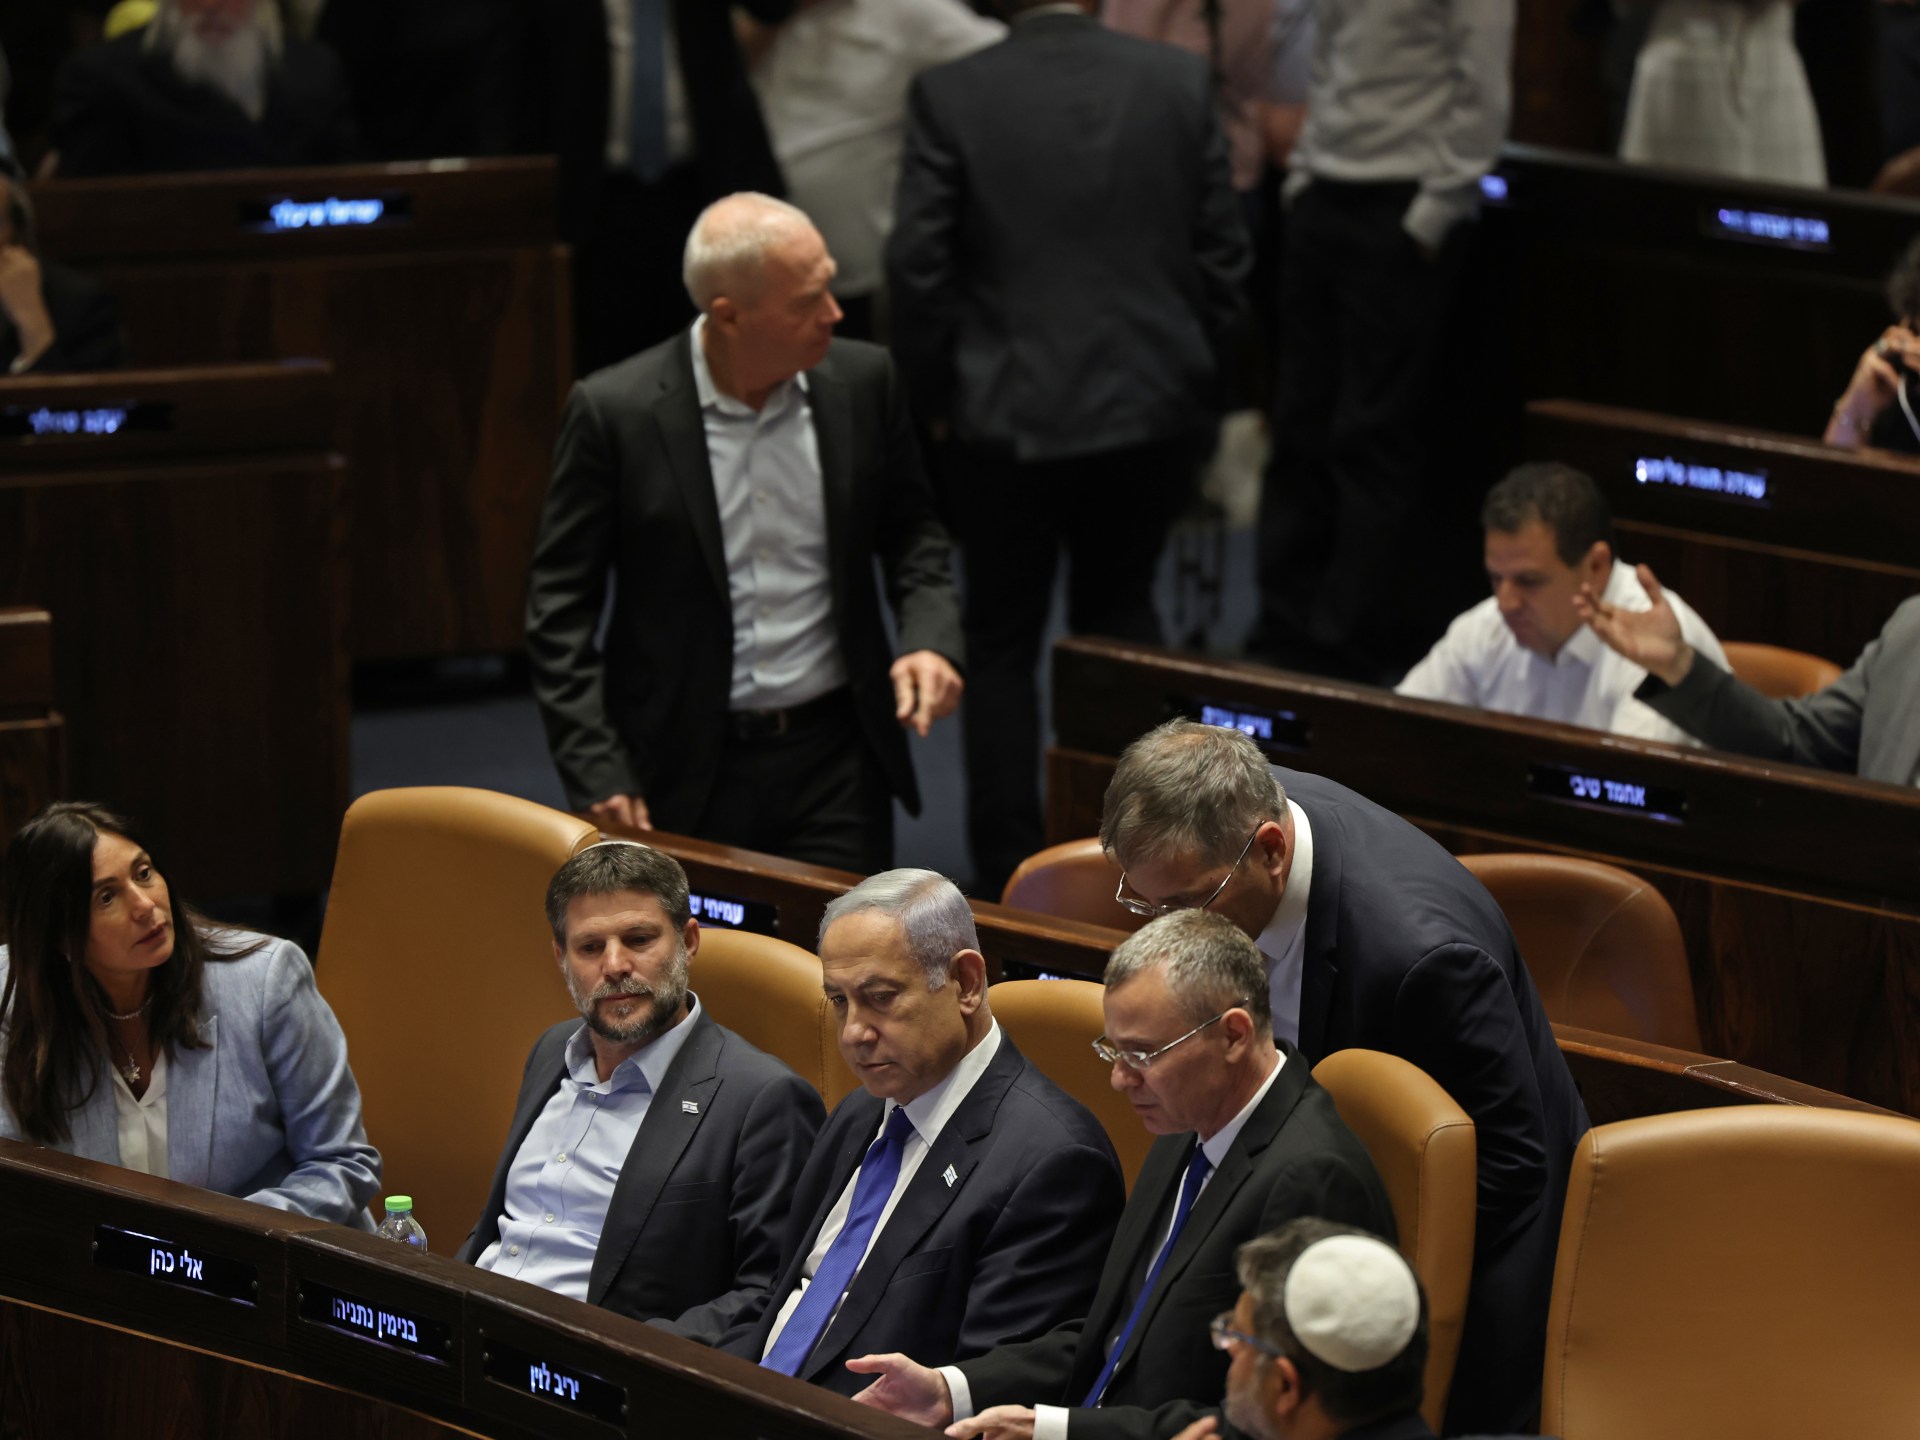 Parlemen Israel mengesahkan undang-undang yang memecah belah yang melemahkan Mahkamah Agung |  Berita